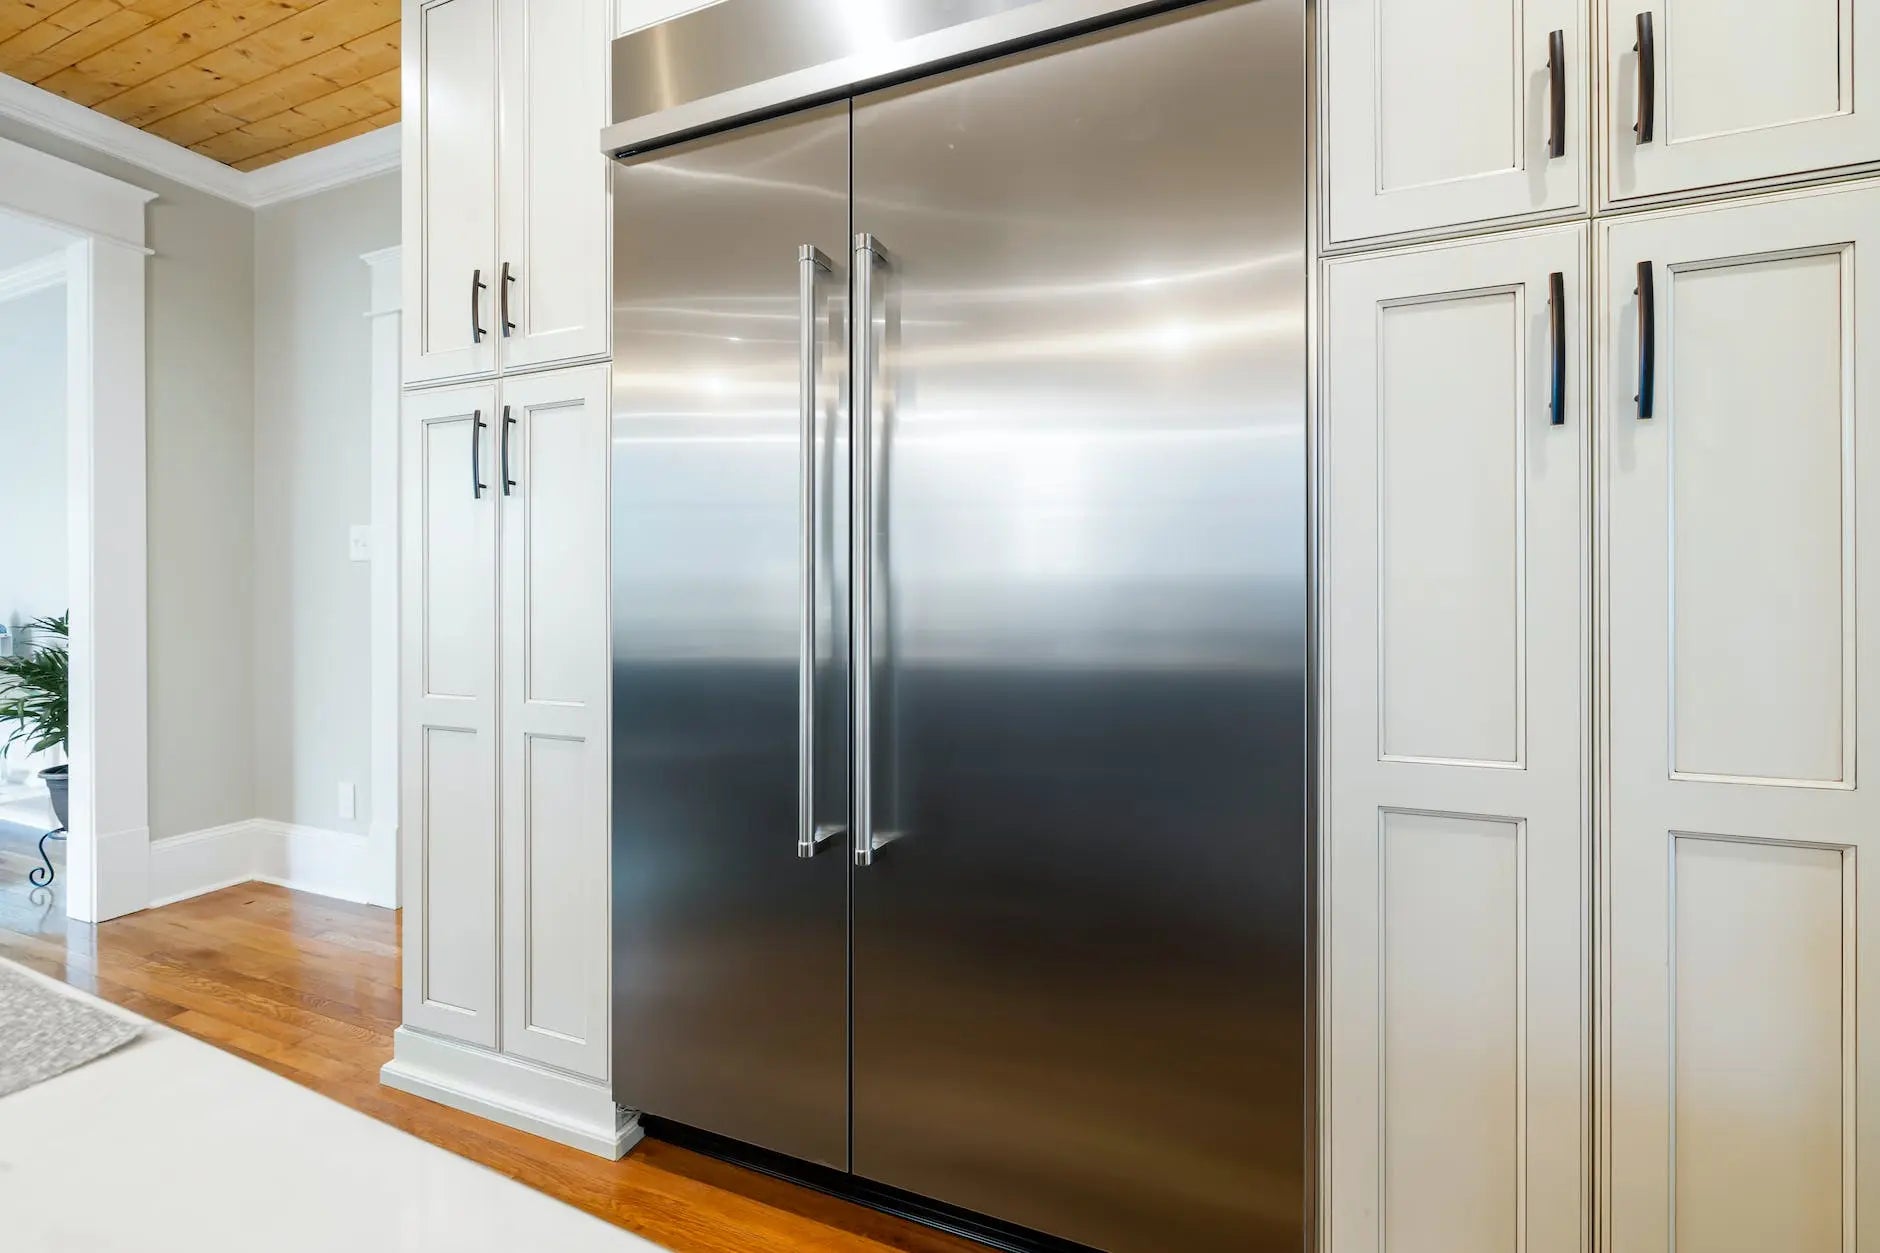 Comparing Refrigerator Designs: The Benefits of French Doors | Fridge.com